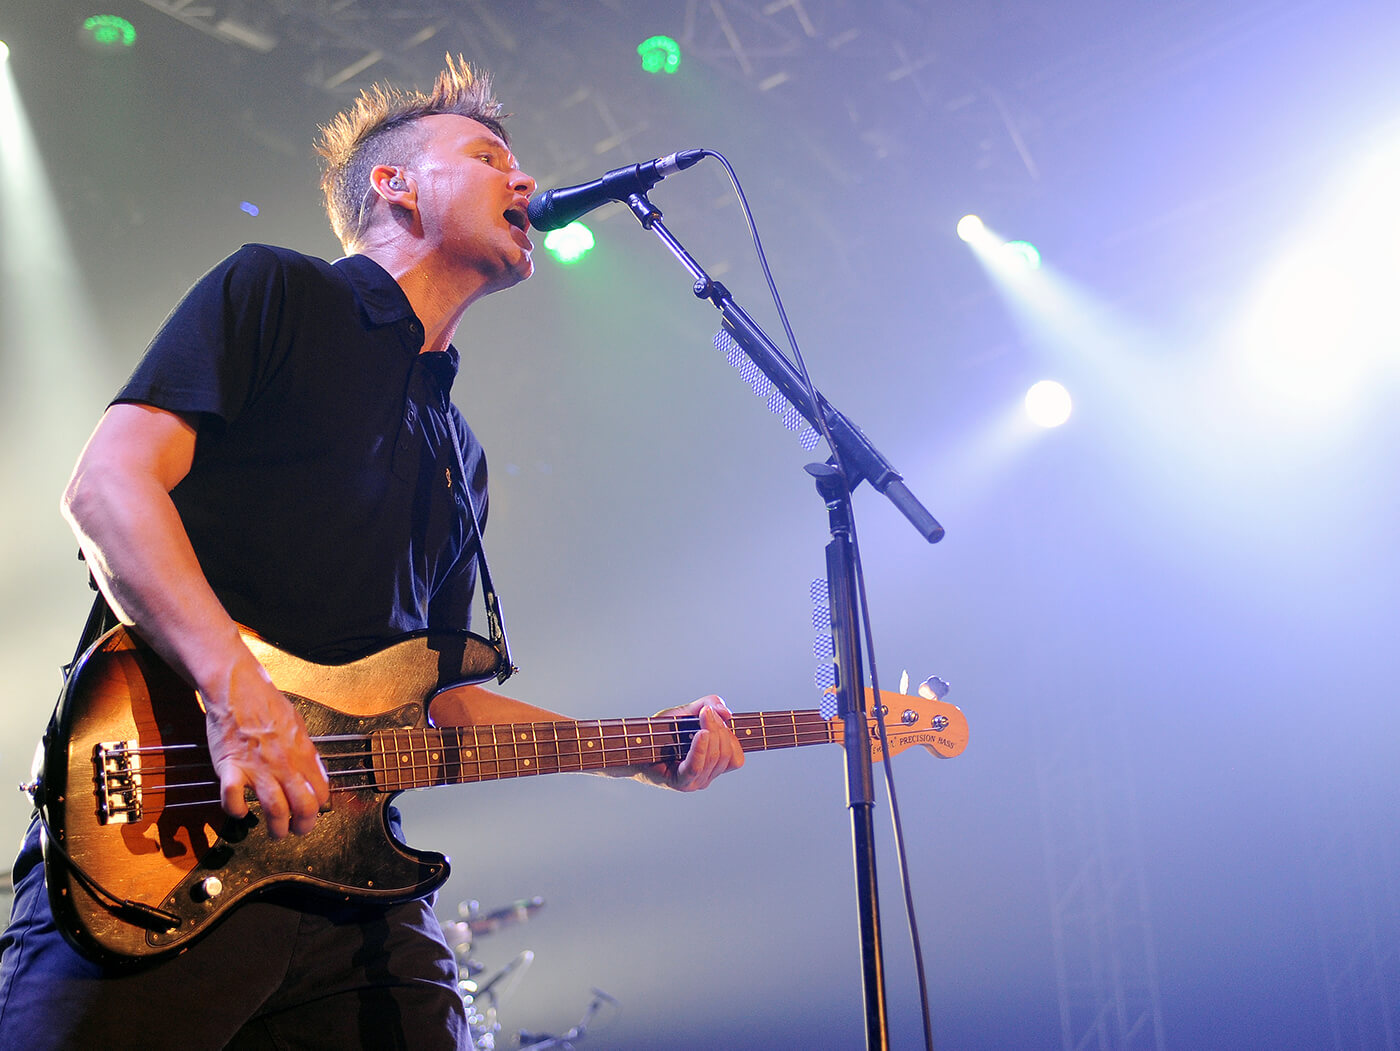 Mark Hoppus of Blink-182 on stage